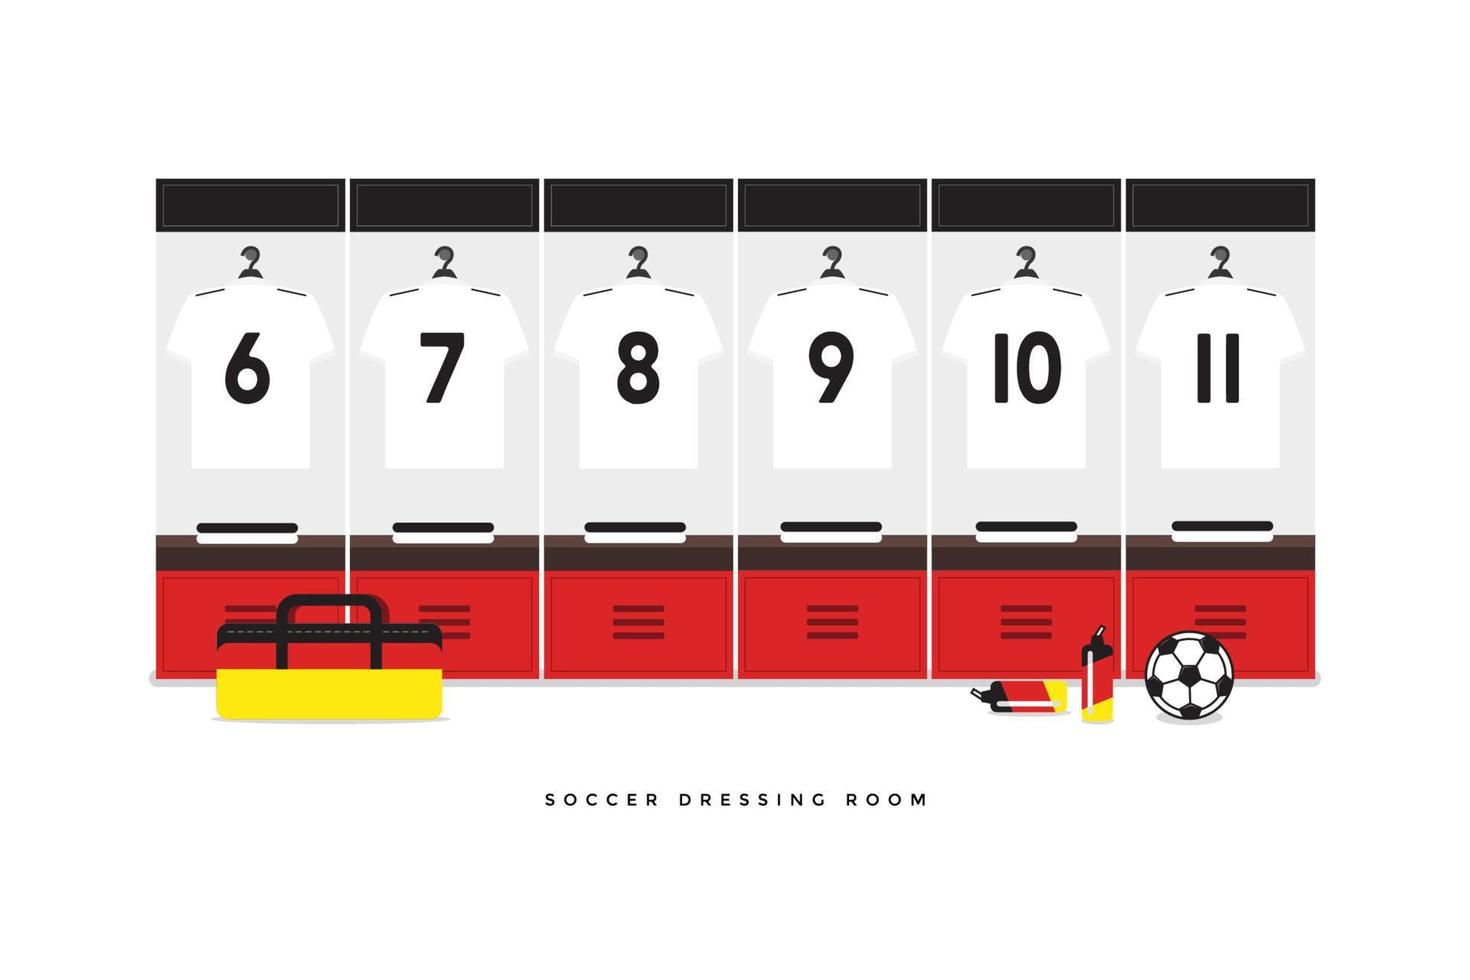 Germany Football or soccer team dressing room. vector